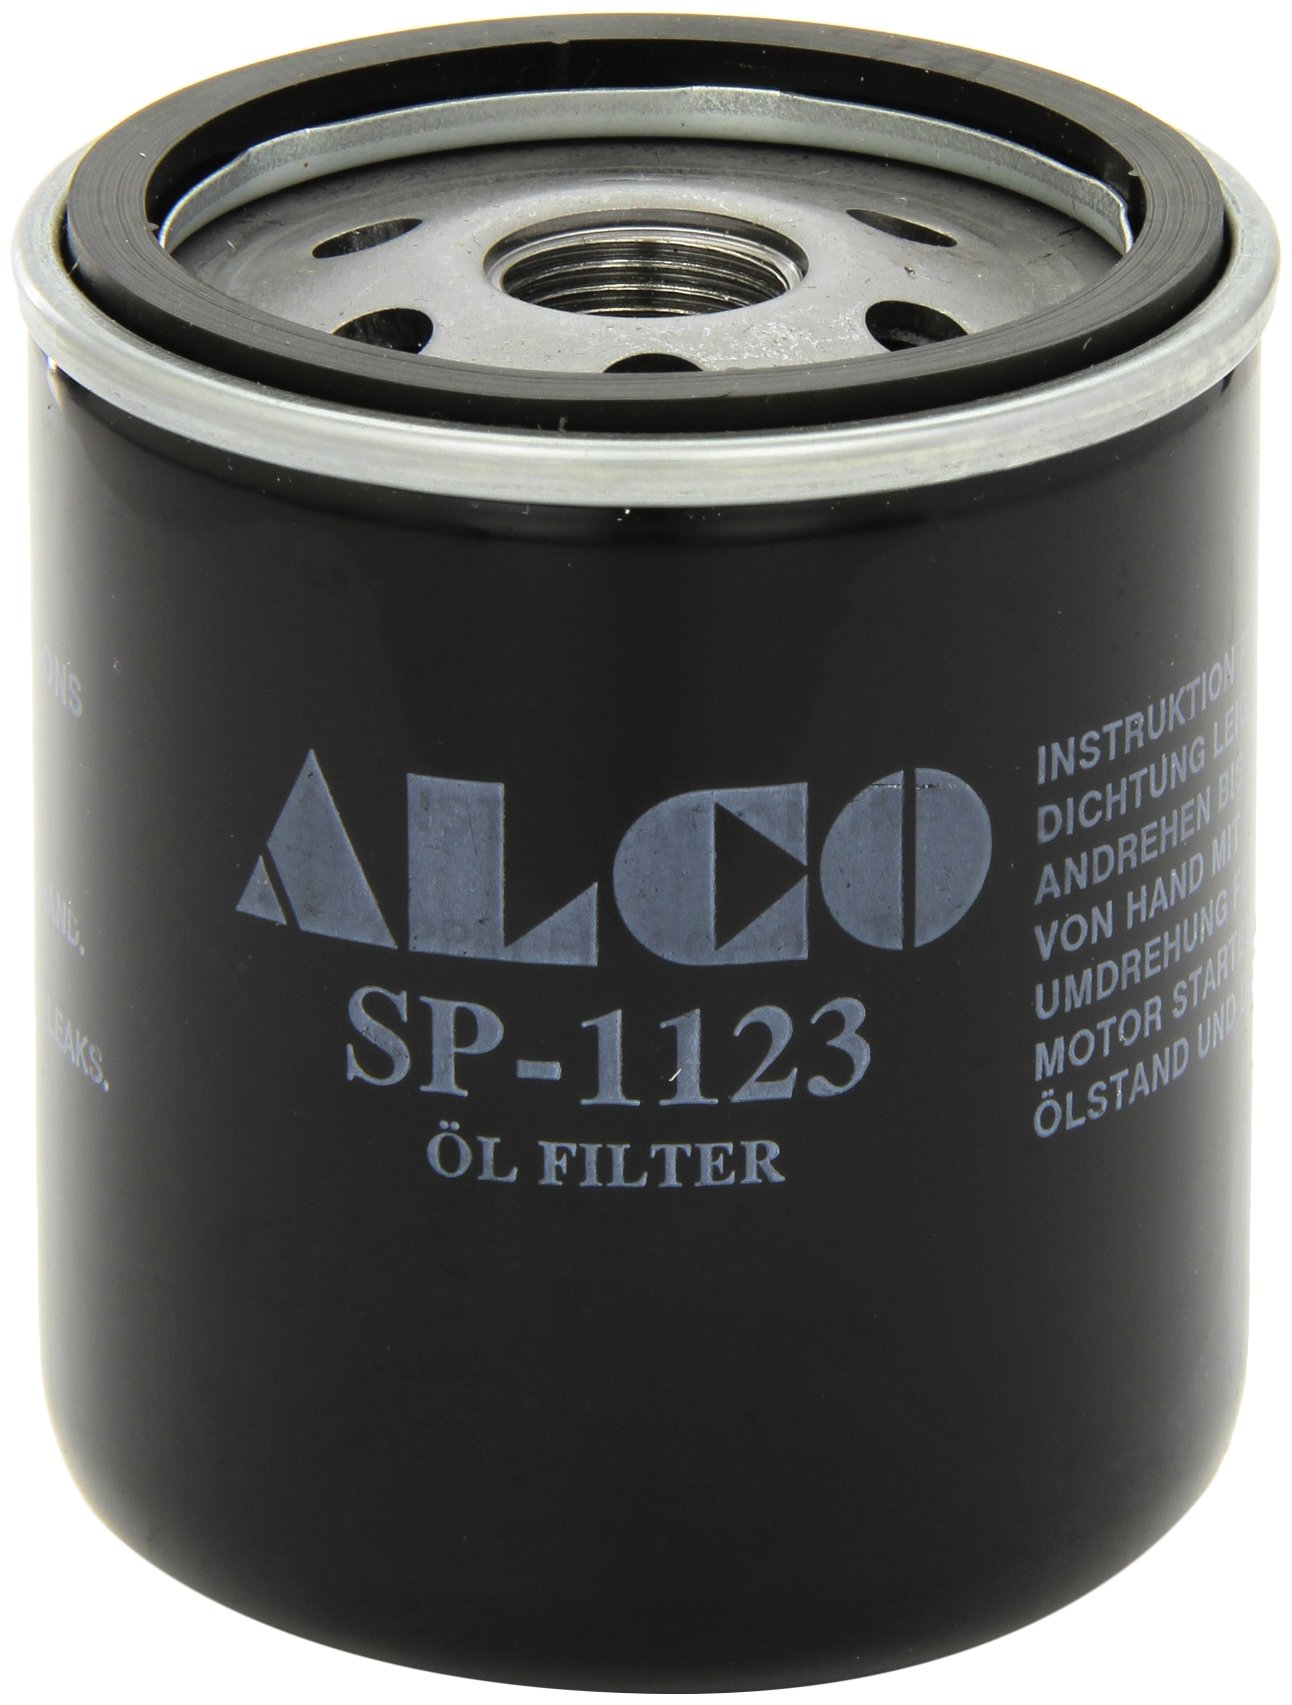 Alco Filter SP-1123 Ölfilter von Alco Filter